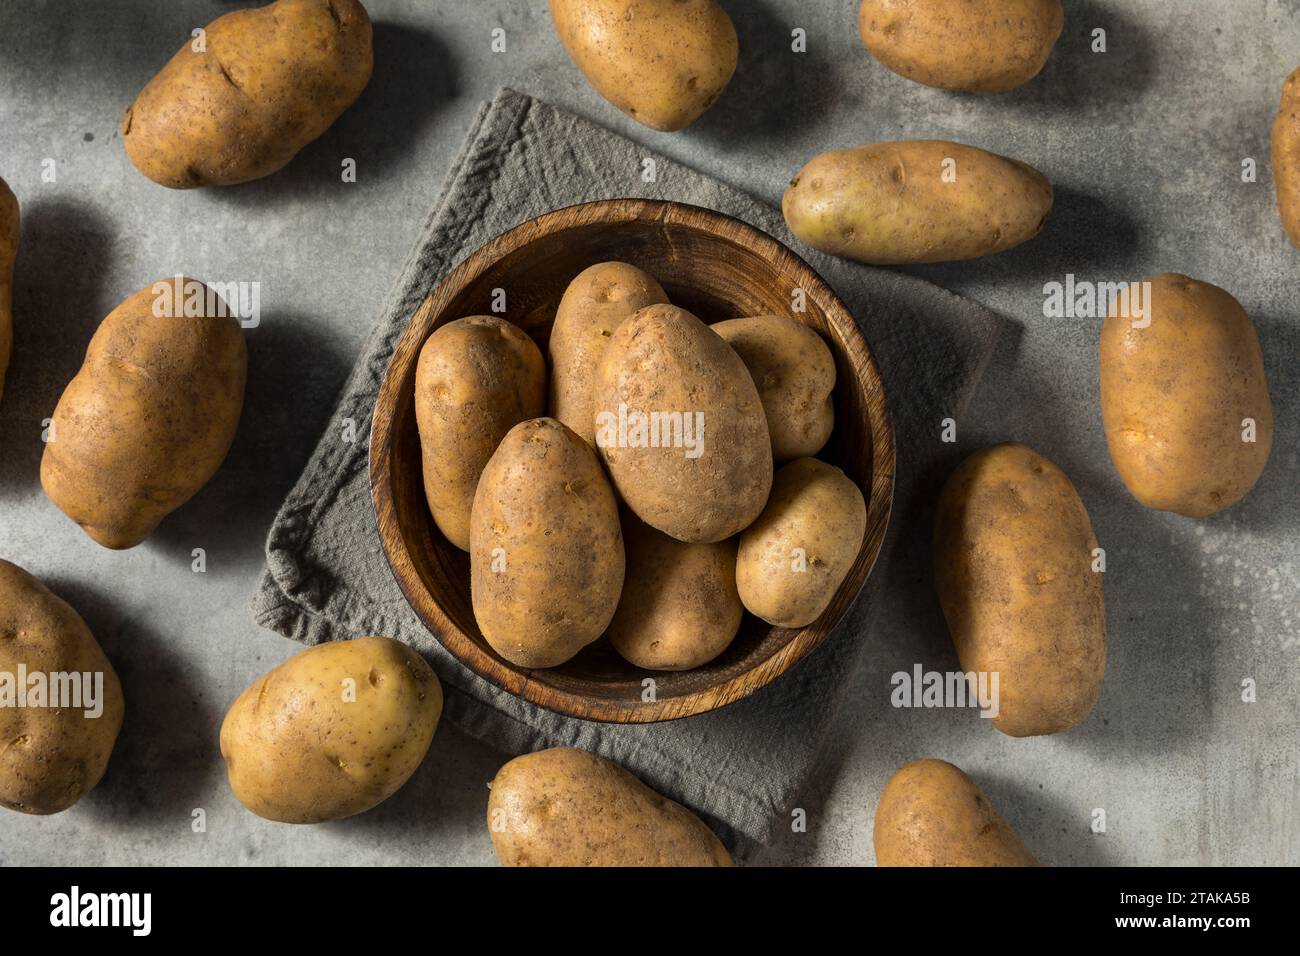 Pommes de terre Russet Idaho bio crues dans un bol Banque D'Images